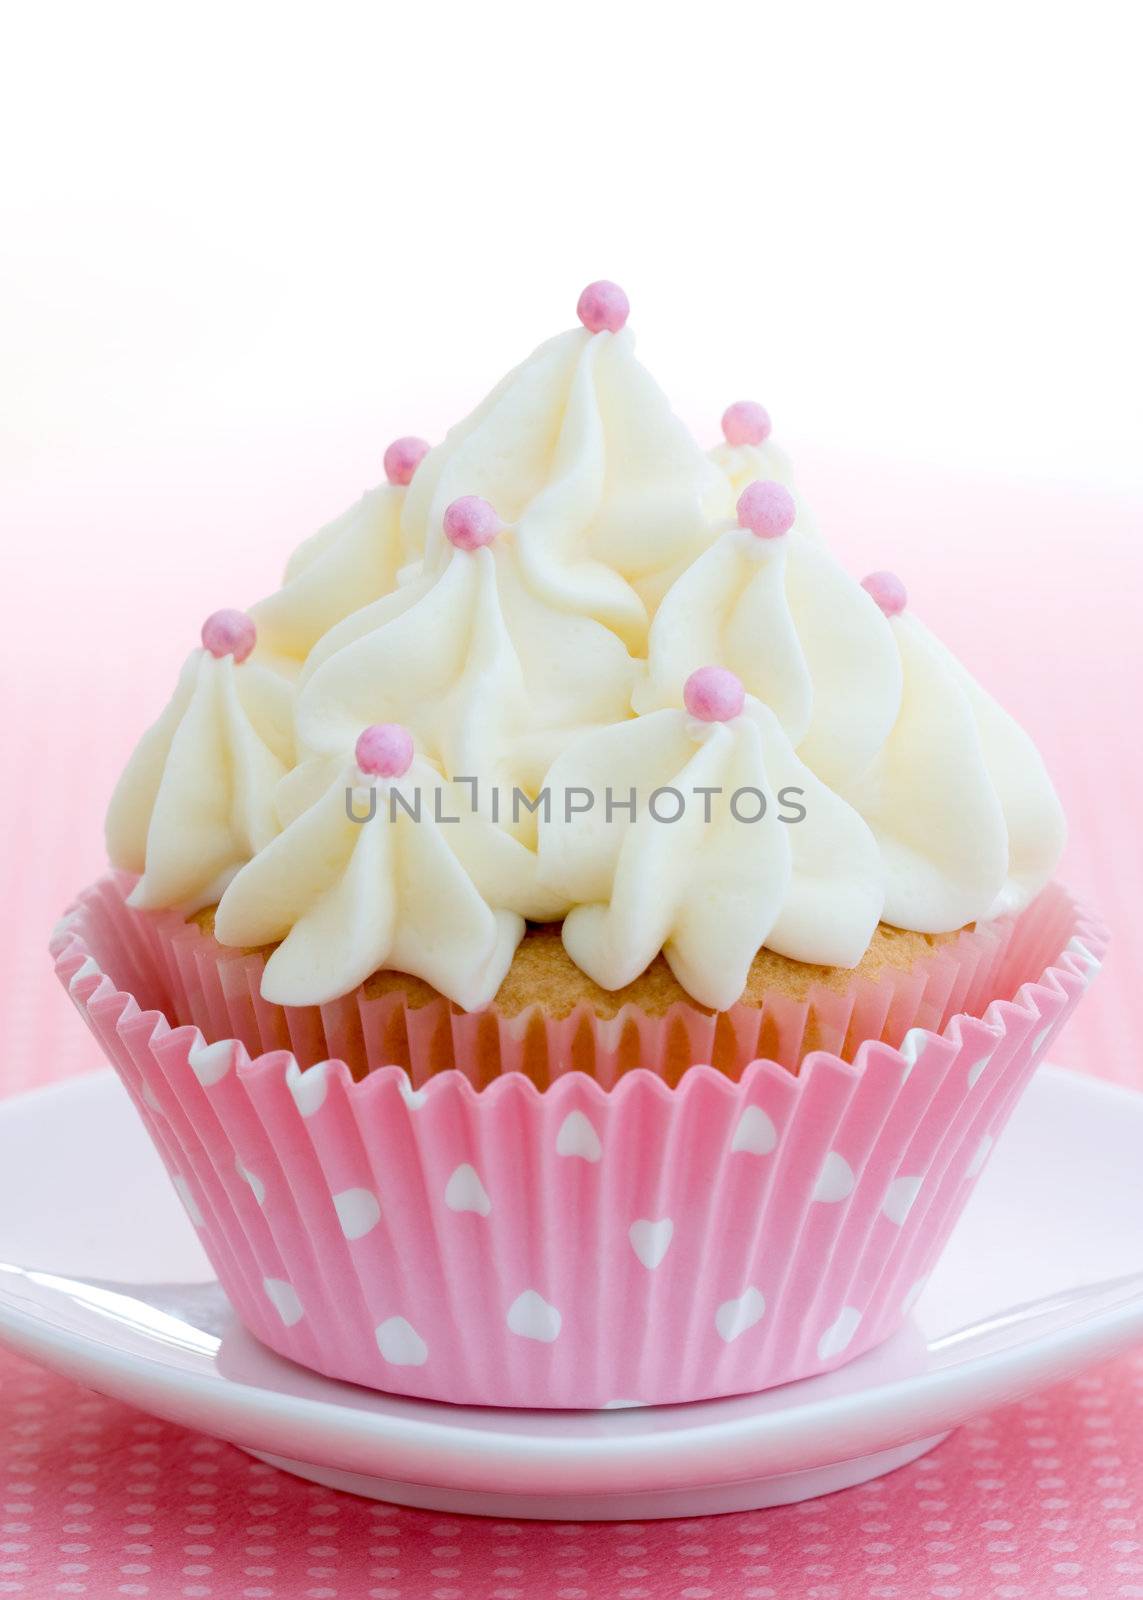 Cupcake in a pink polka dot wrapper